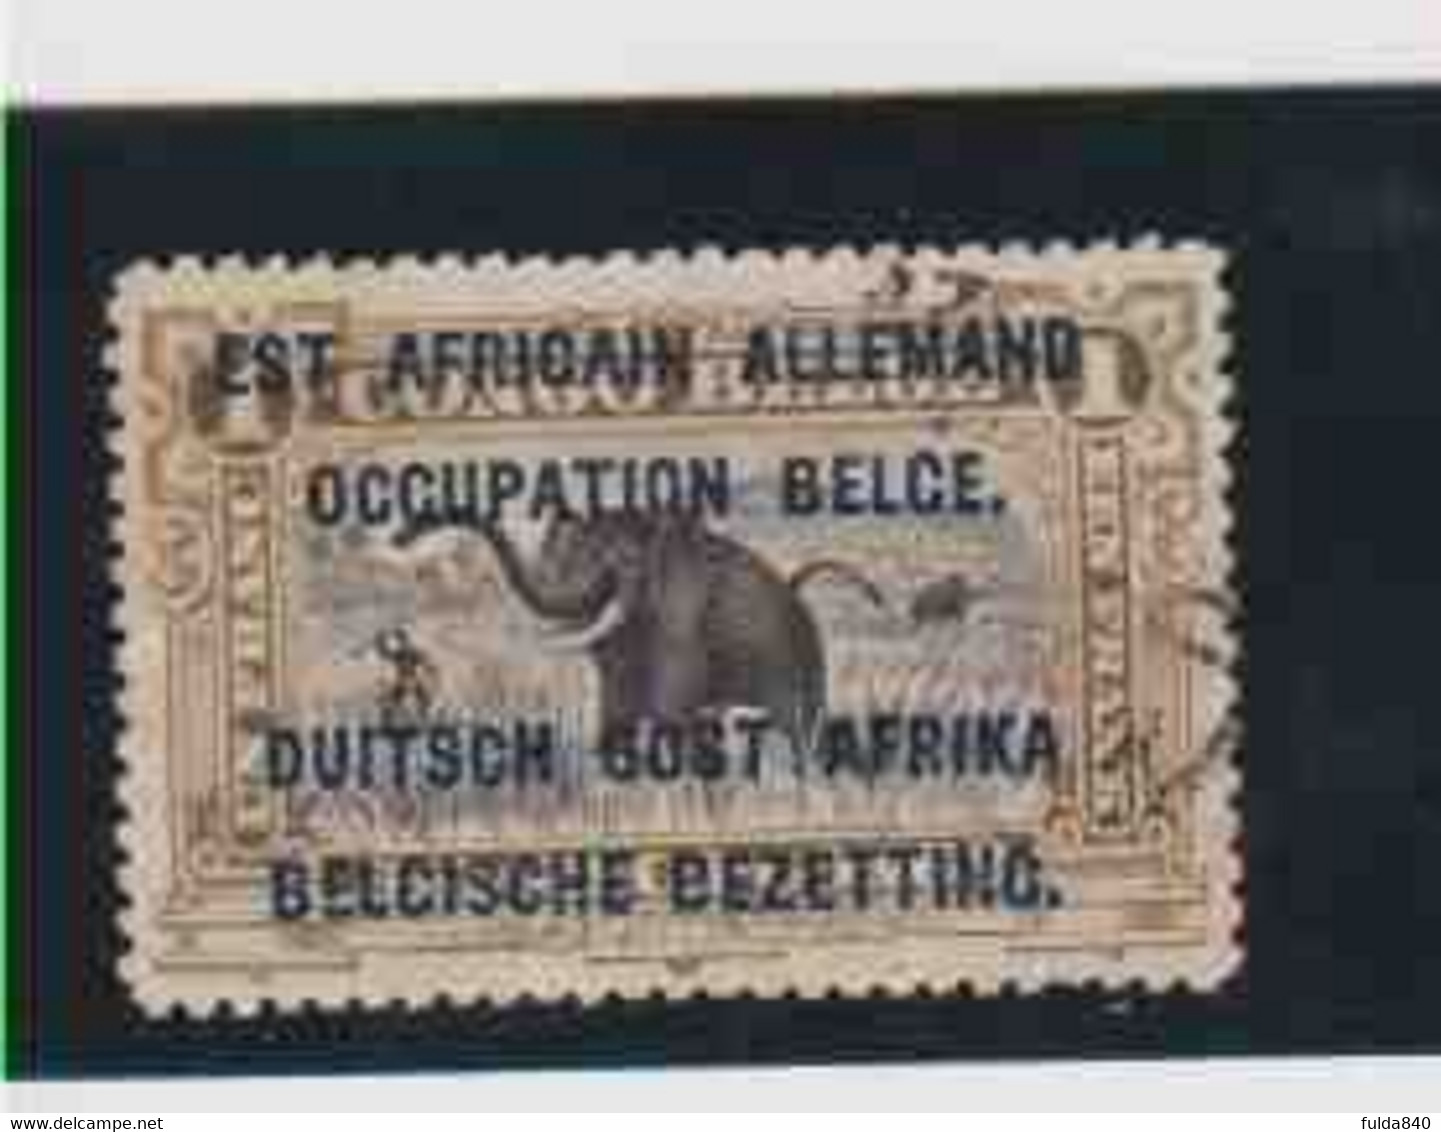 RUANDA-URUNDI. (OBP-COB) 1916 - N°34  *Est Africain Allemand, Occupation Belge*   1F.  Obli  () - Gebruikt